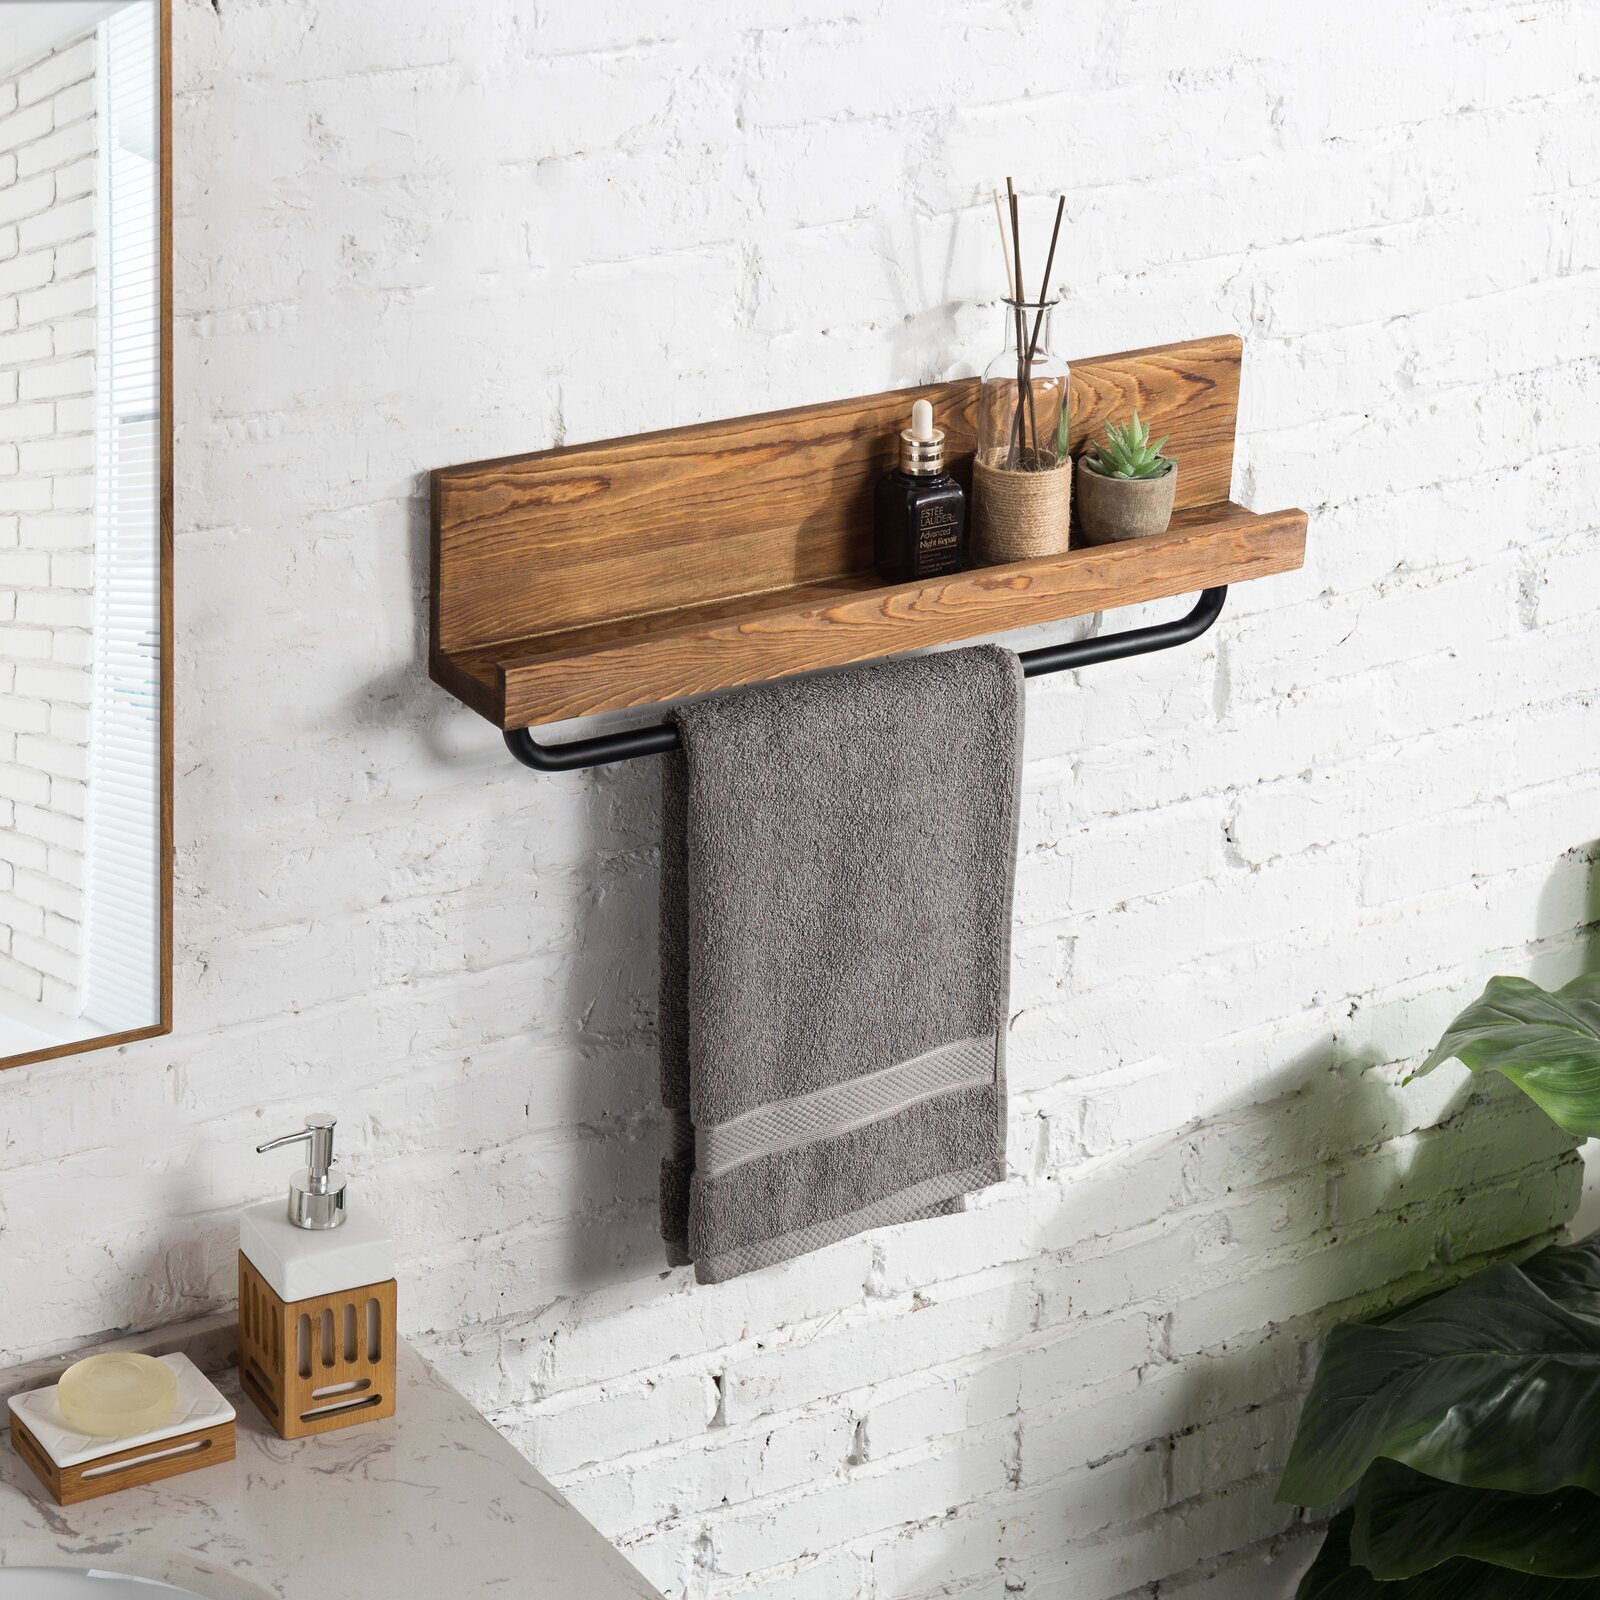 Wooden Towel Racks - Ideas on Foter